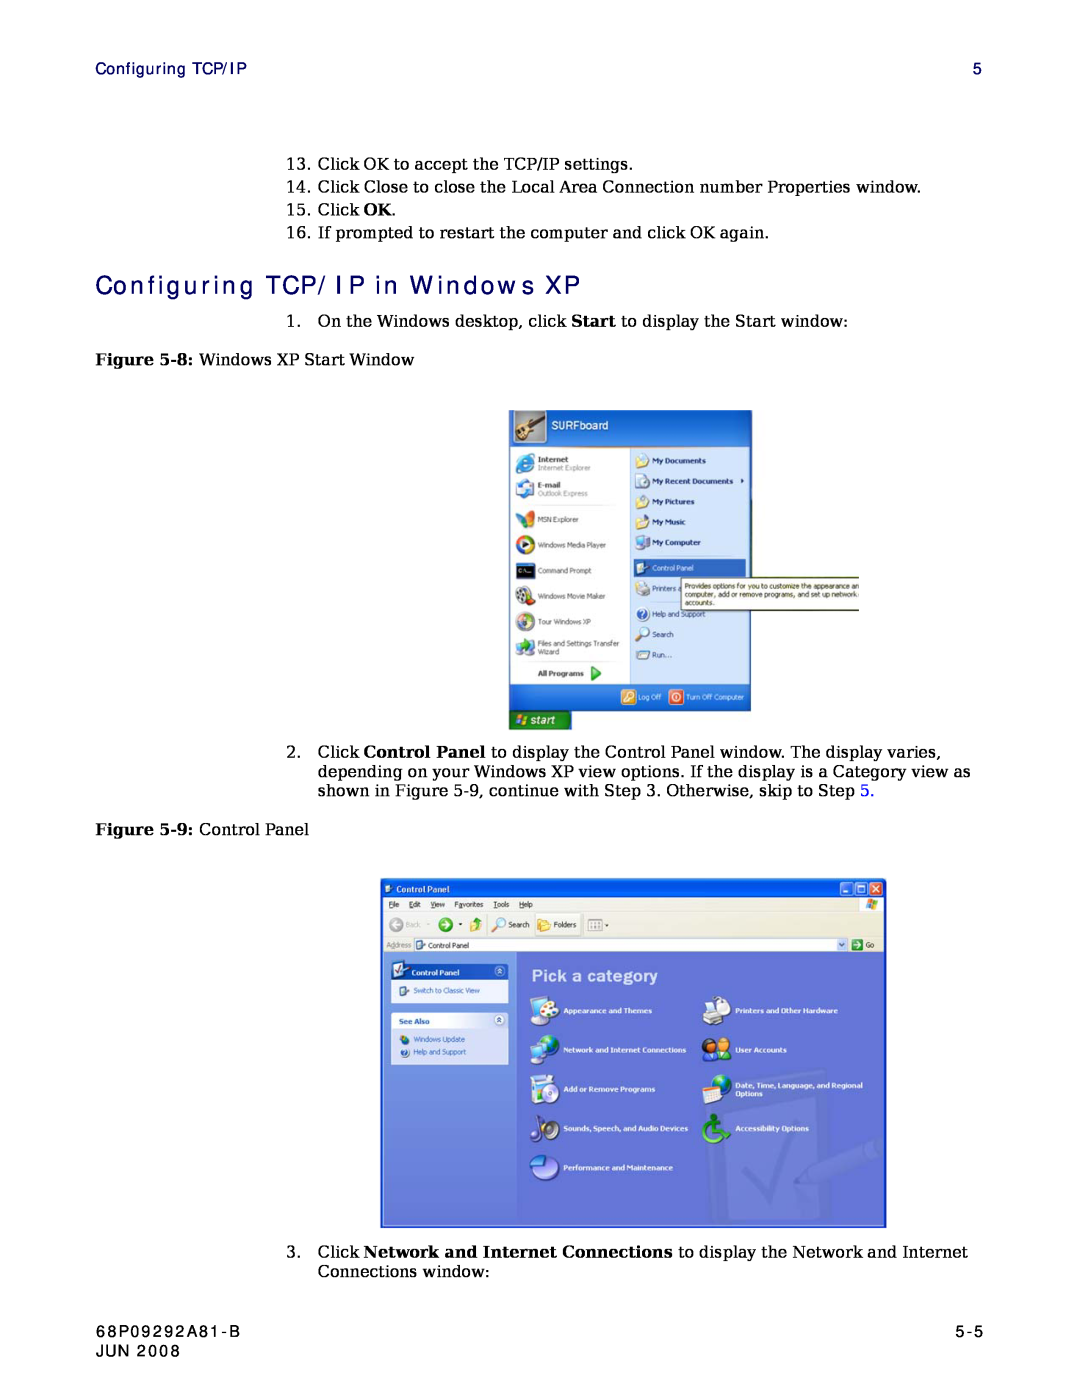 Motorola CPEI 750 manual Configuring TCP/IP in Windows XP, 68P09292A81-B 